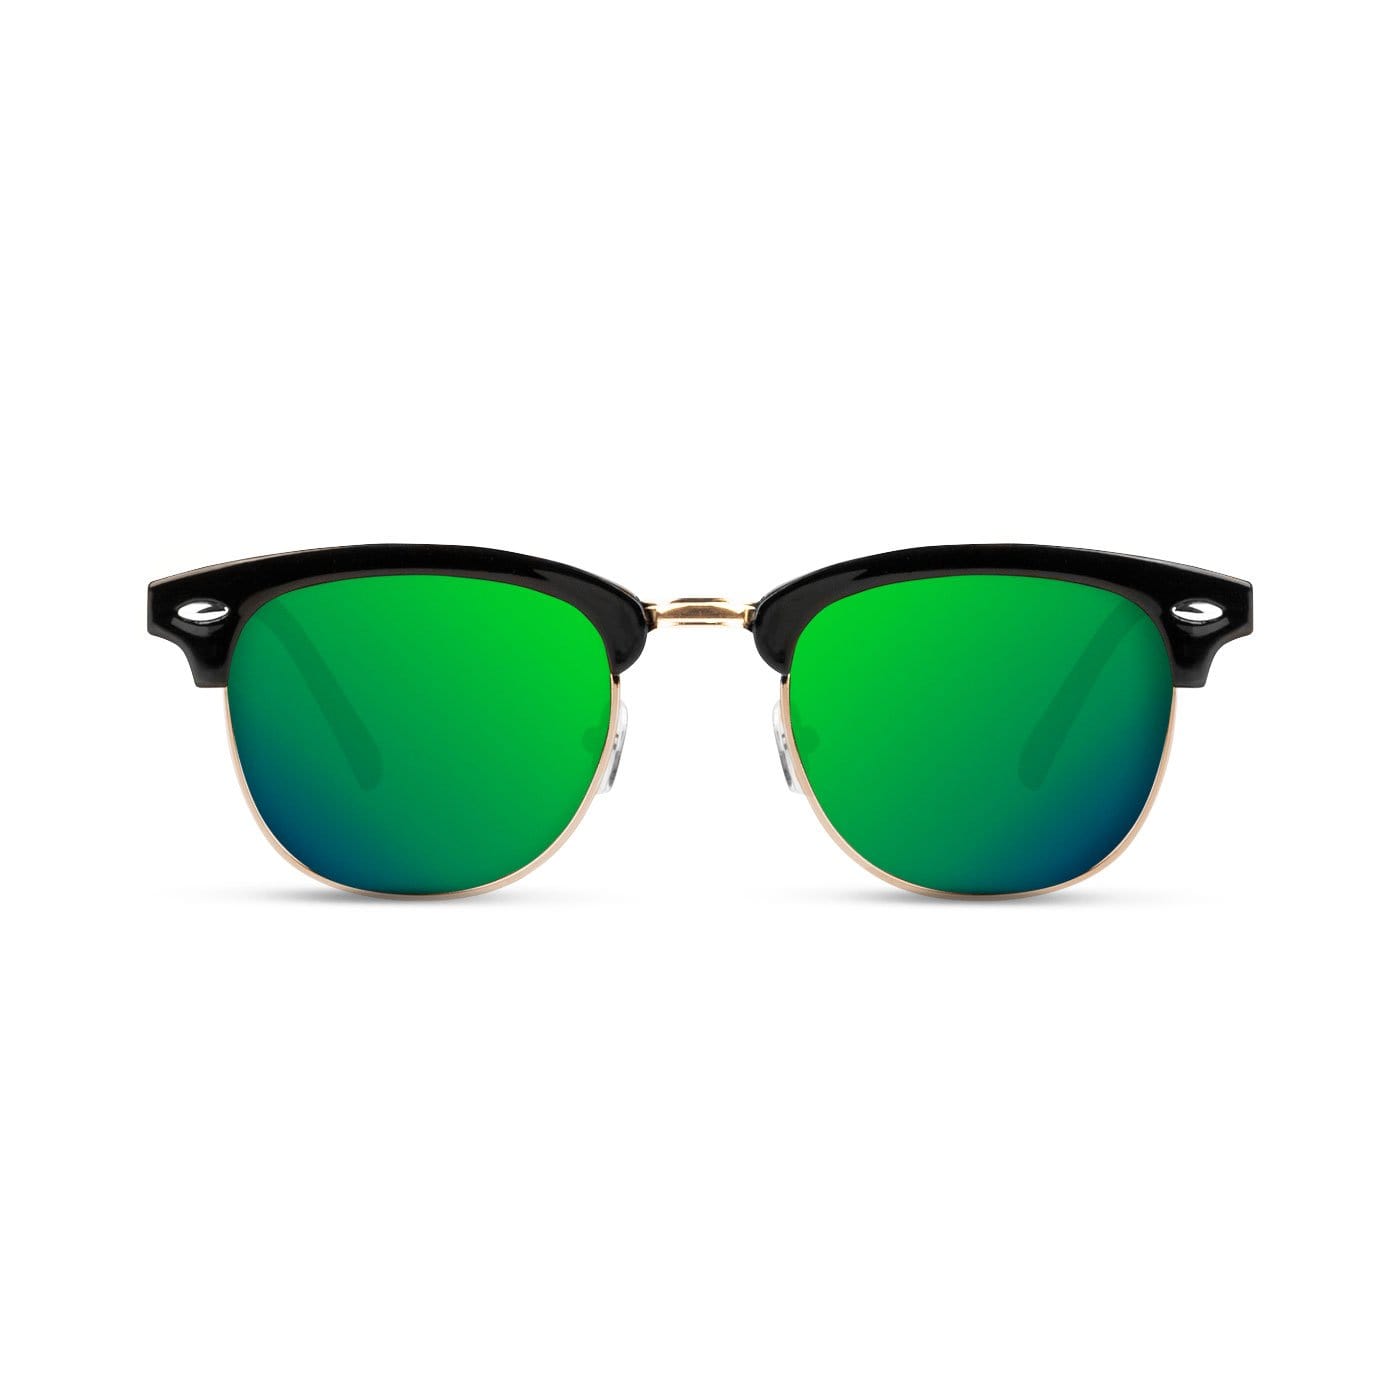 Malaca Shinny Black Gold / Green Sunglasses